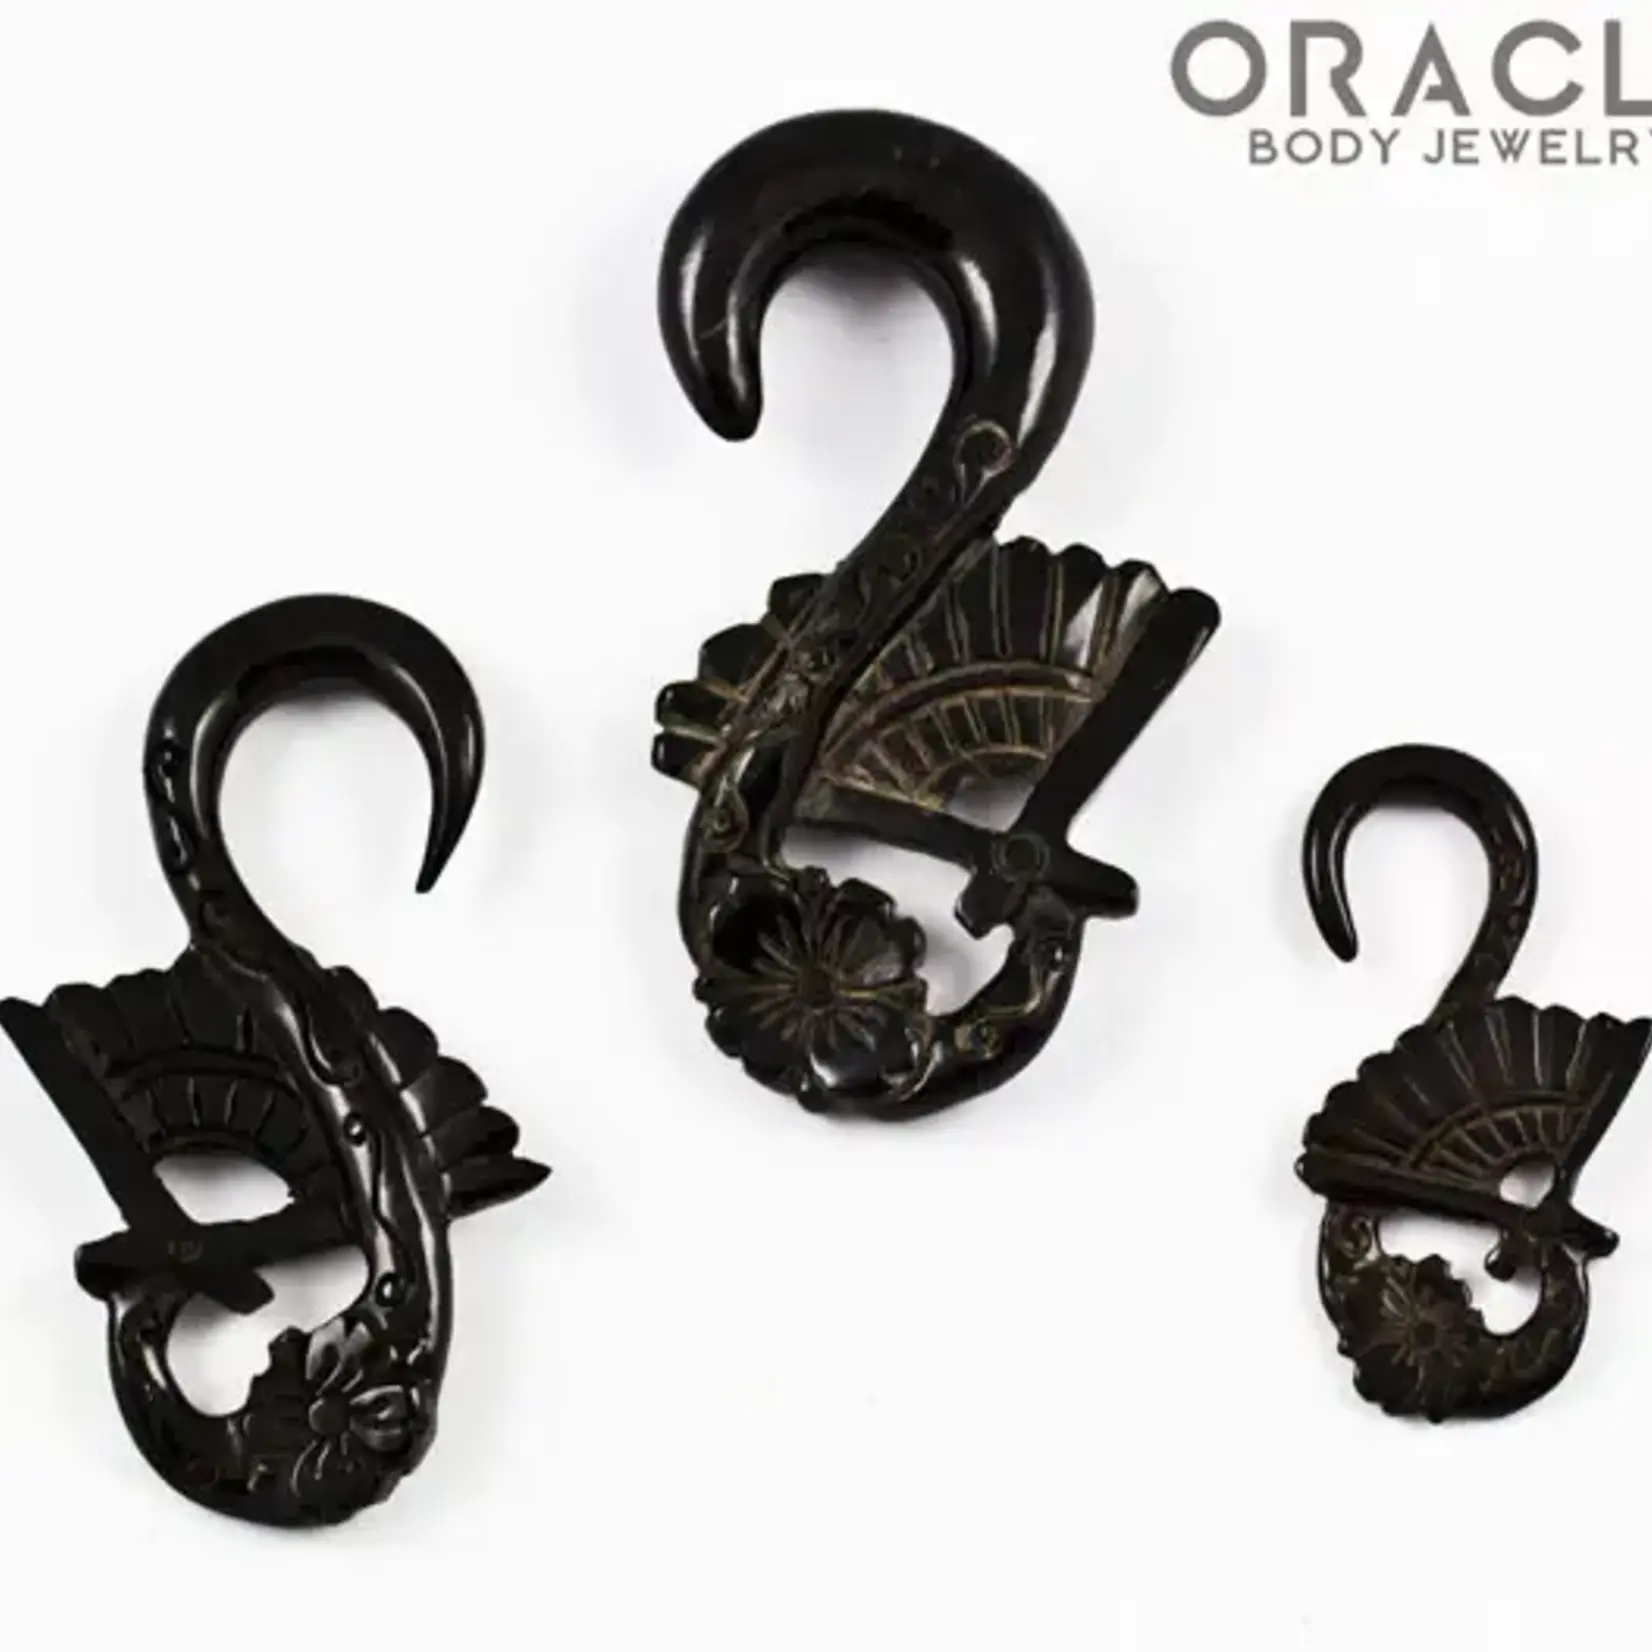 Oracle Oracle Body Jewelry 10g buffalo horn "Geisha" hanging design